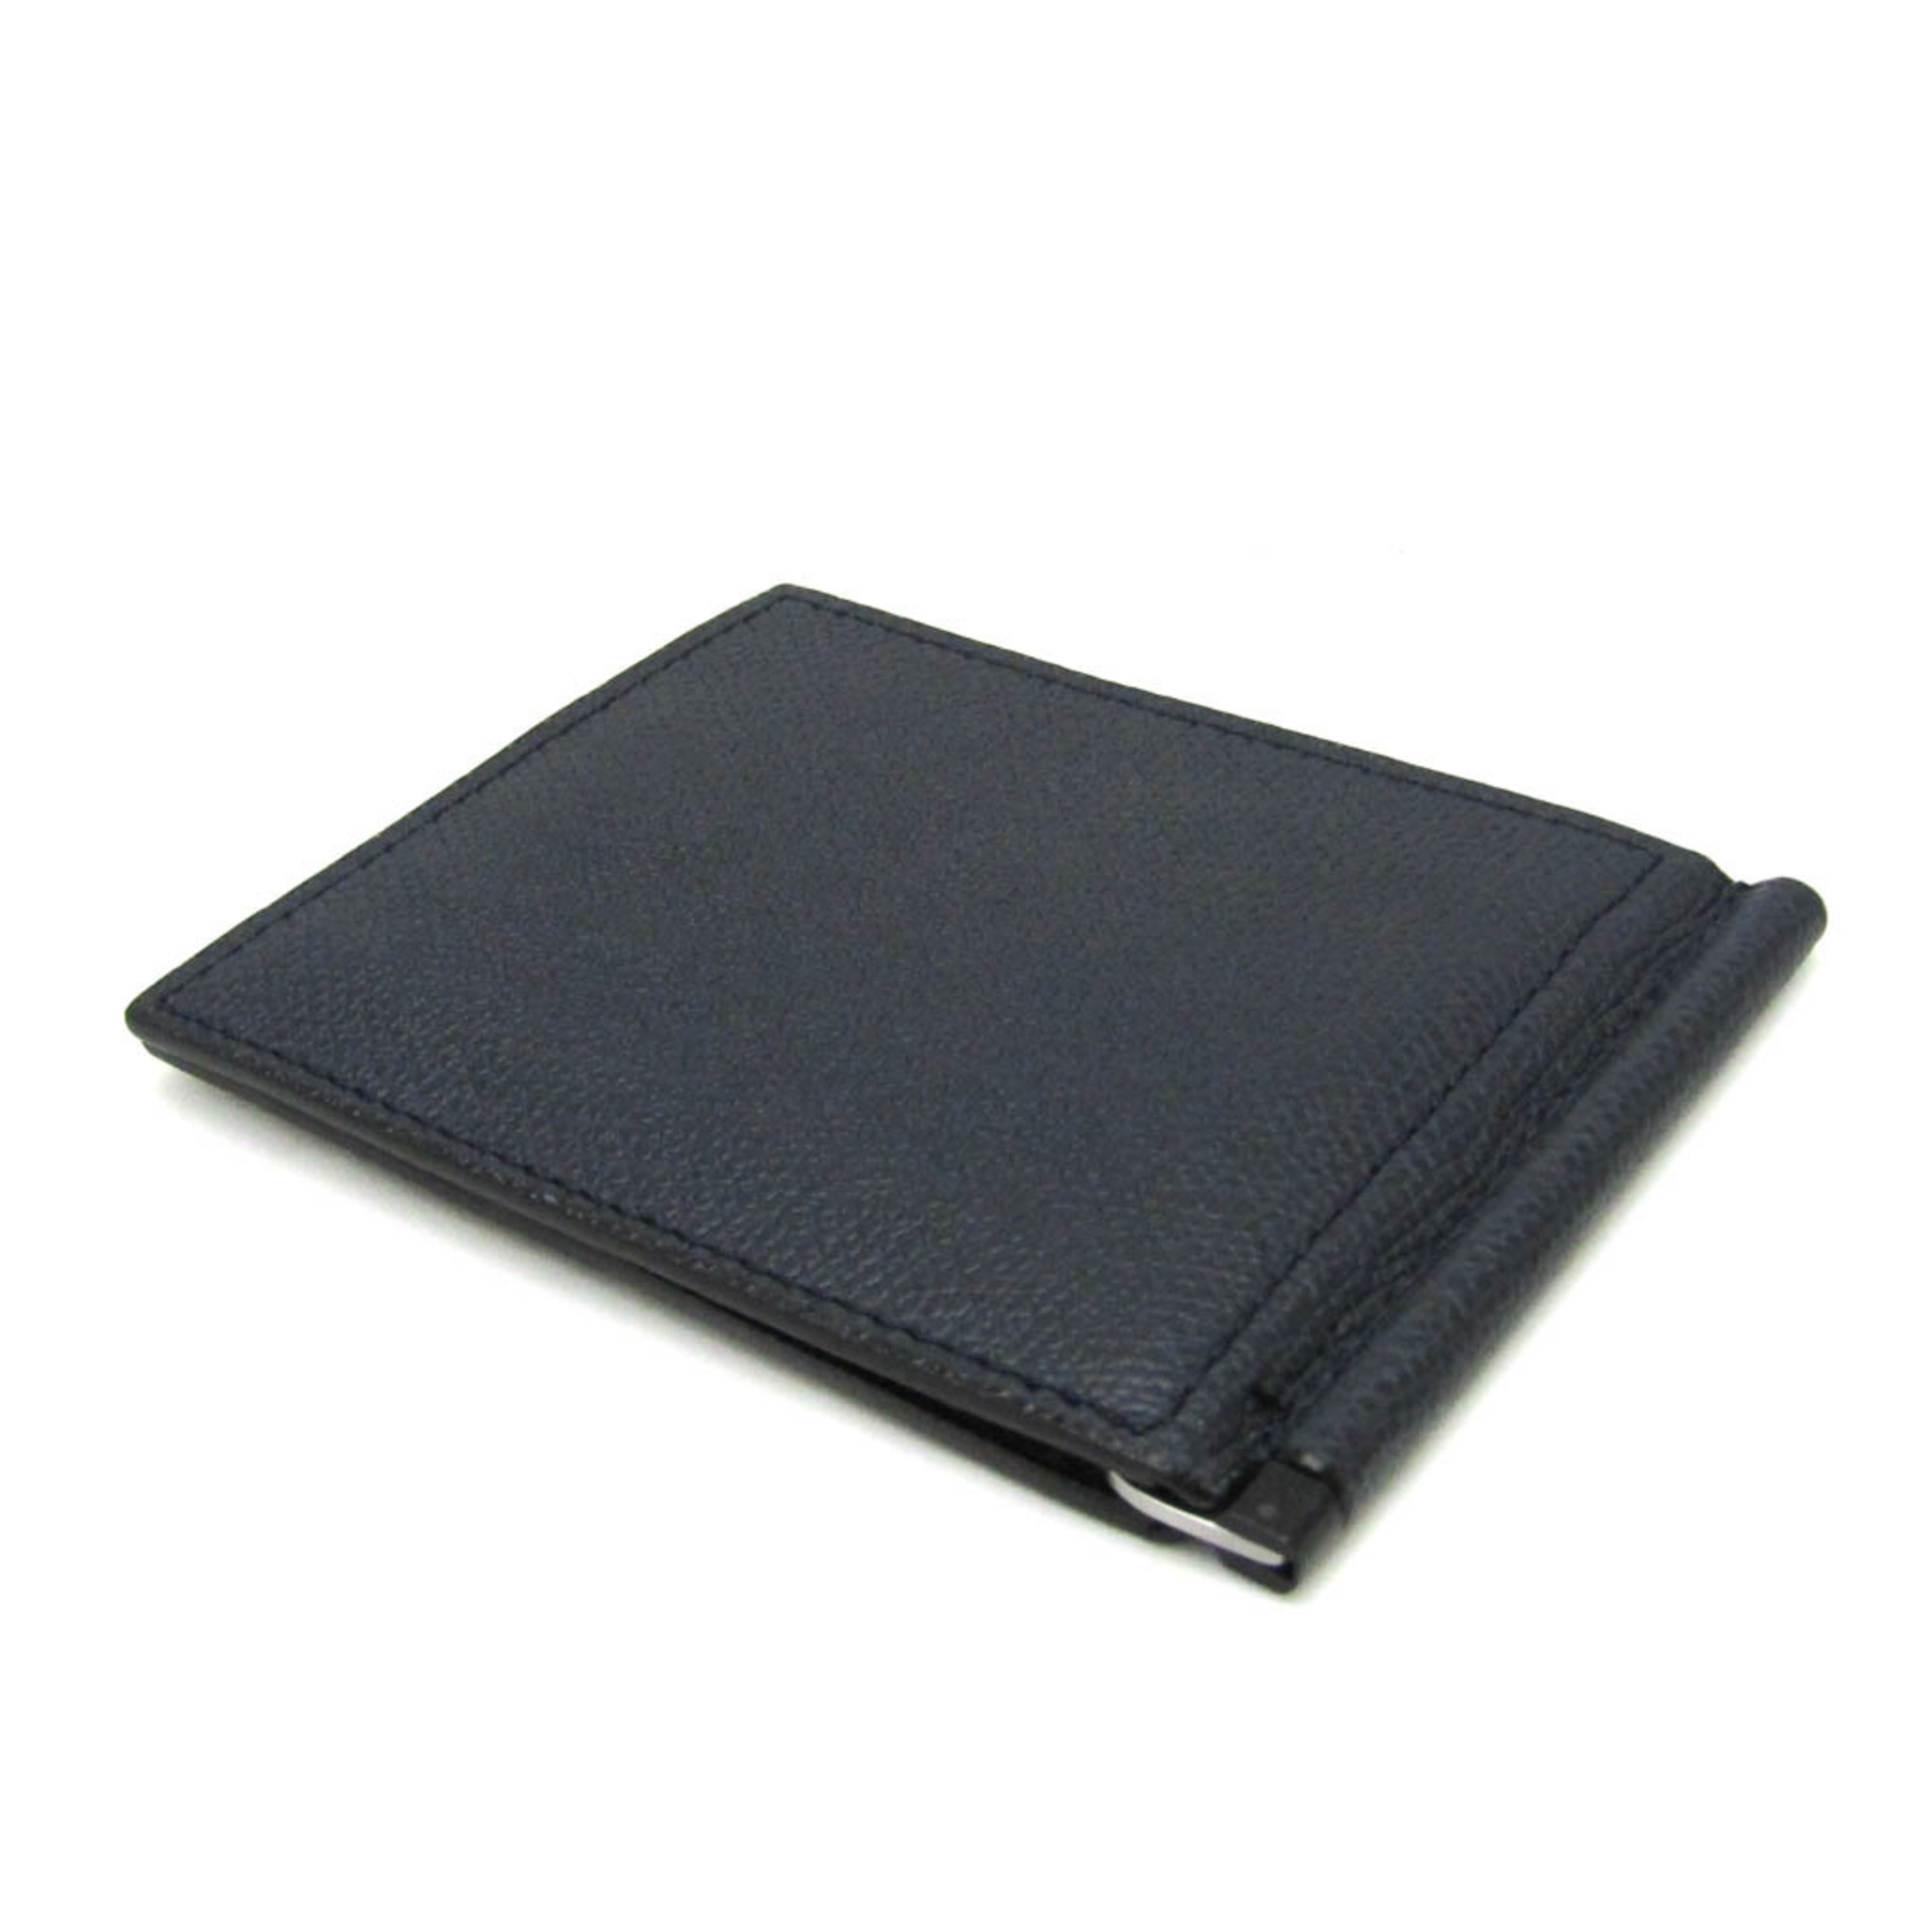 Valextra Money Clip SGSR0080028LRDWG99 Leather Card Case Dark Navy